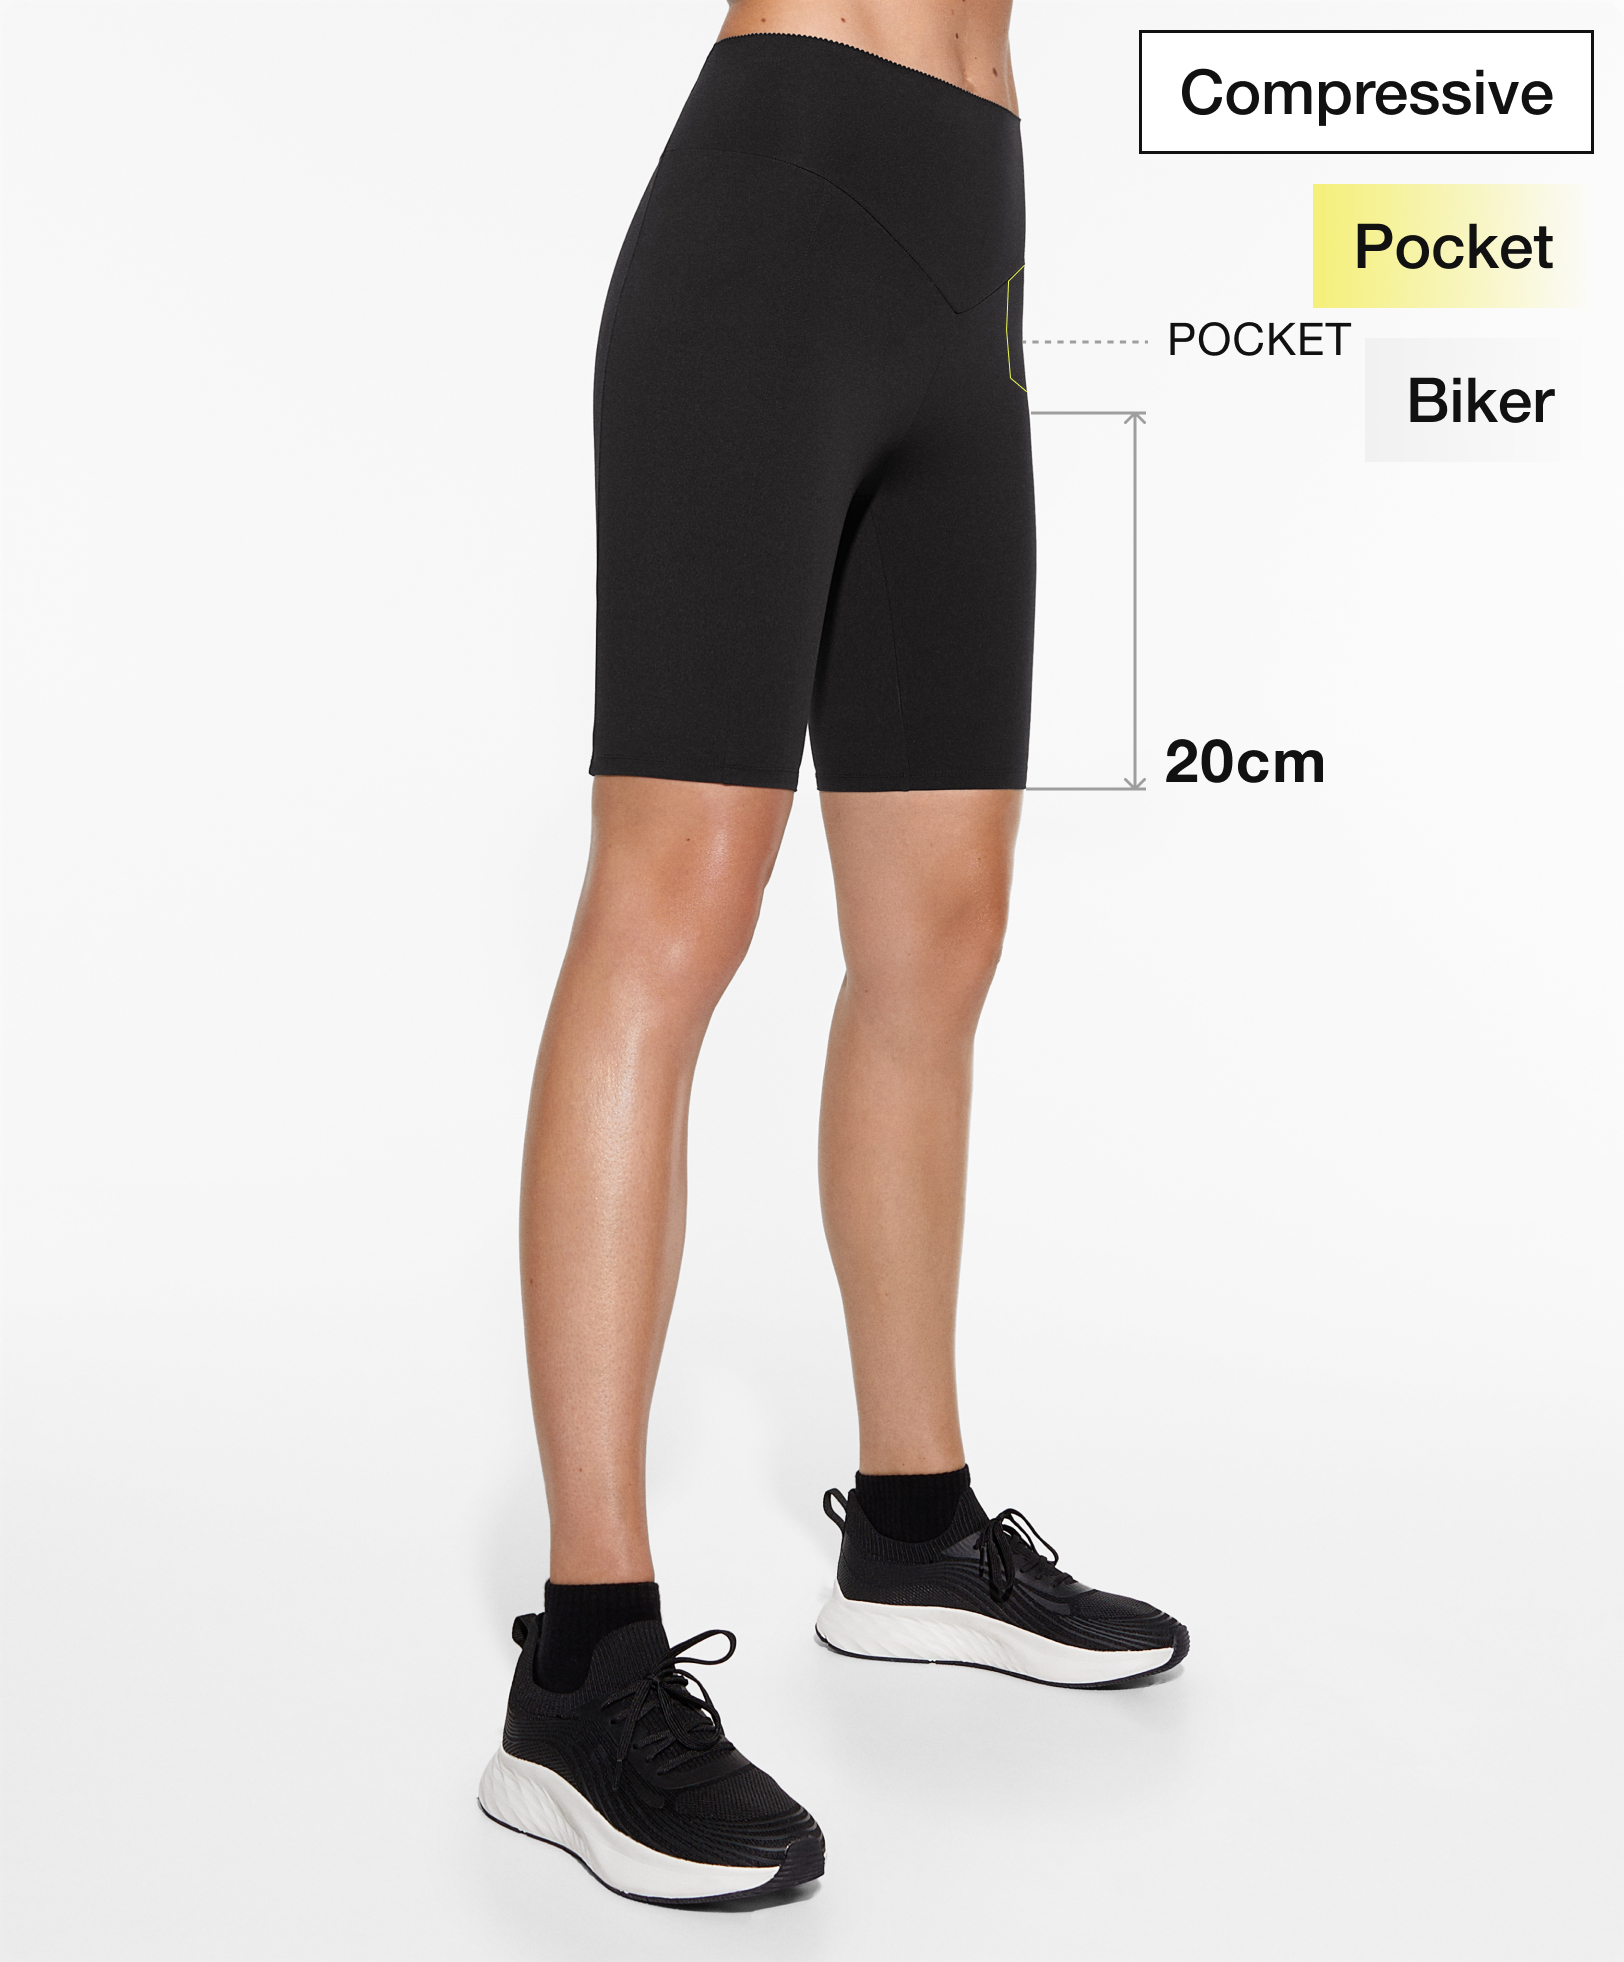 Legging cycliste compressive pocket 20 cm